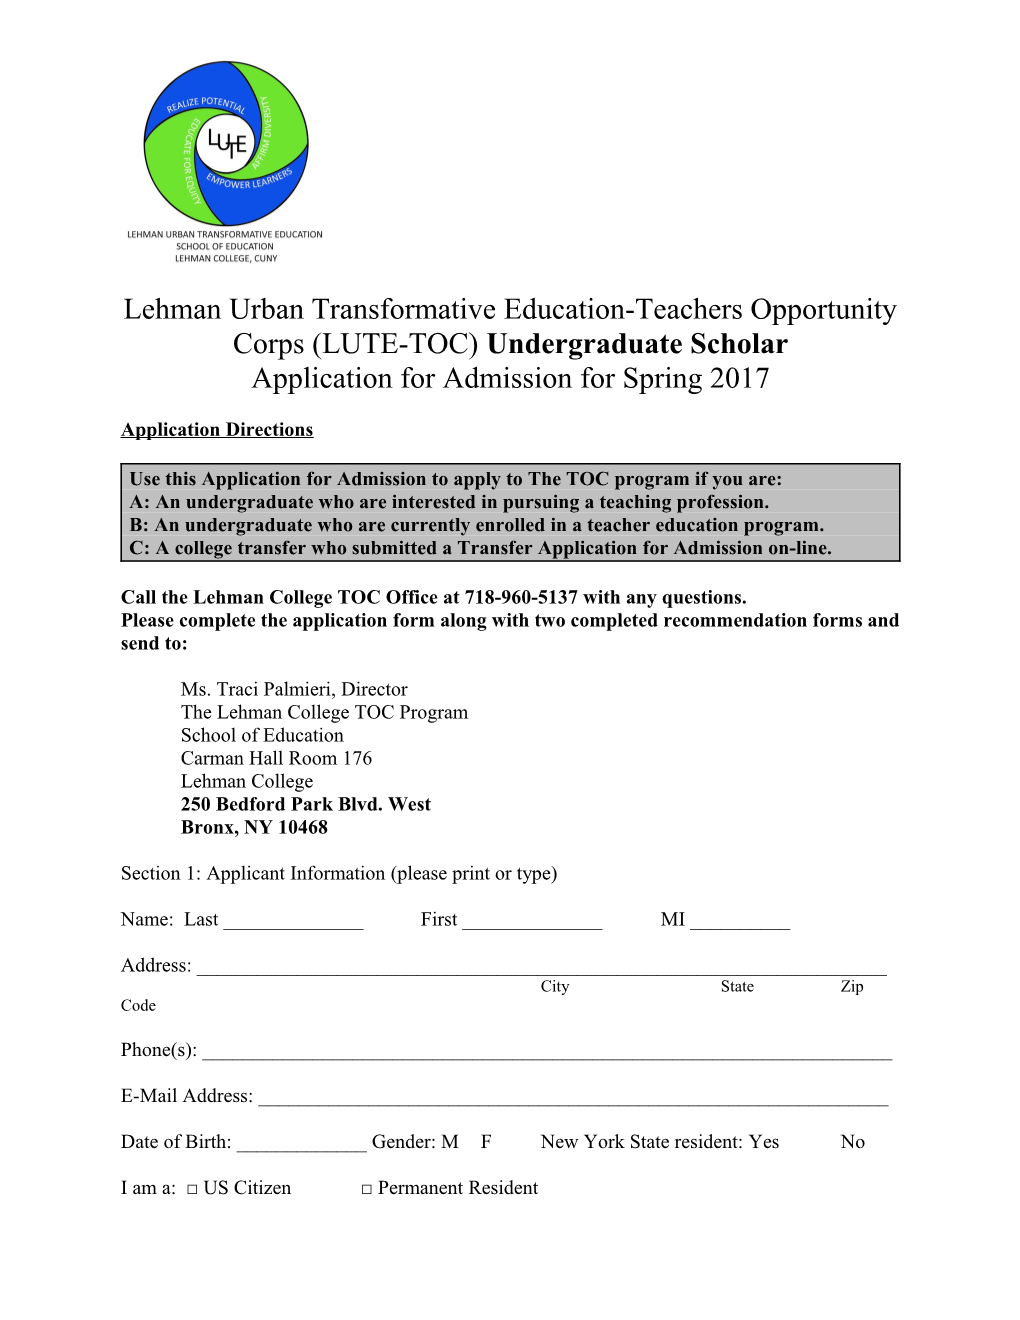 Lehman Urban Transformative Education-Teachers Opportunity Corps (LUTE-TOC) Undergraduate